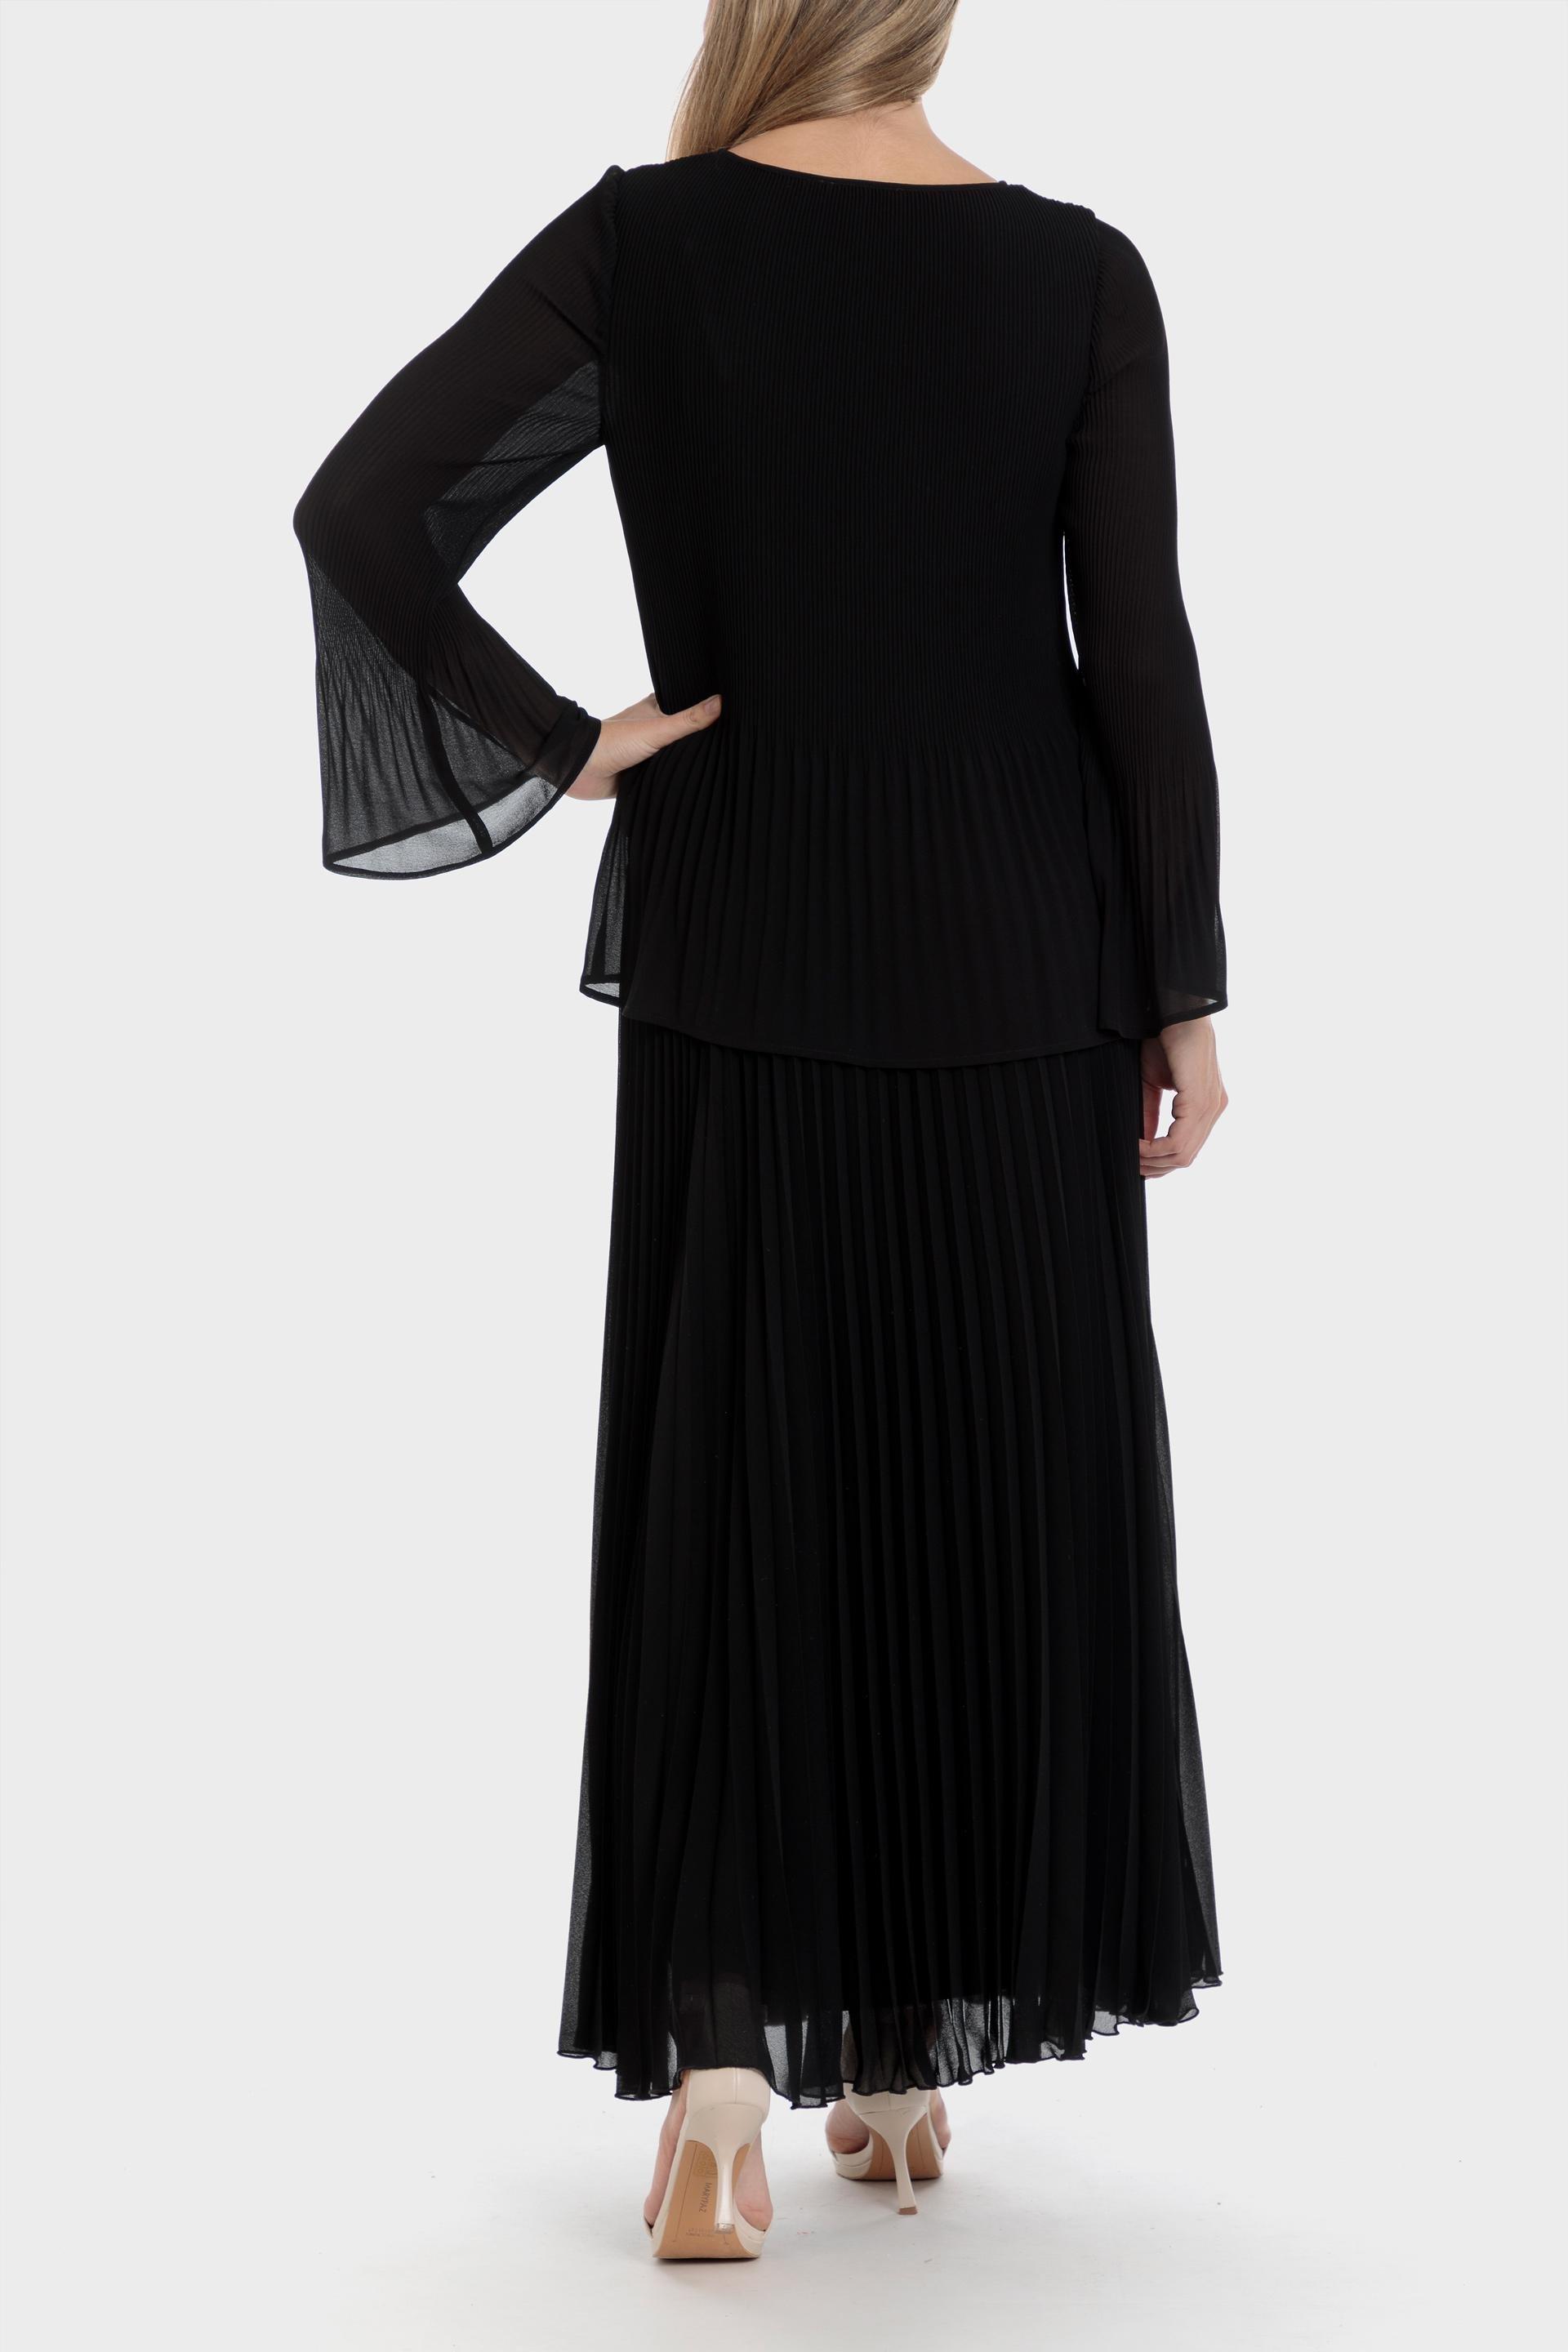 Punt Roma - Black Long Pleated Skirt